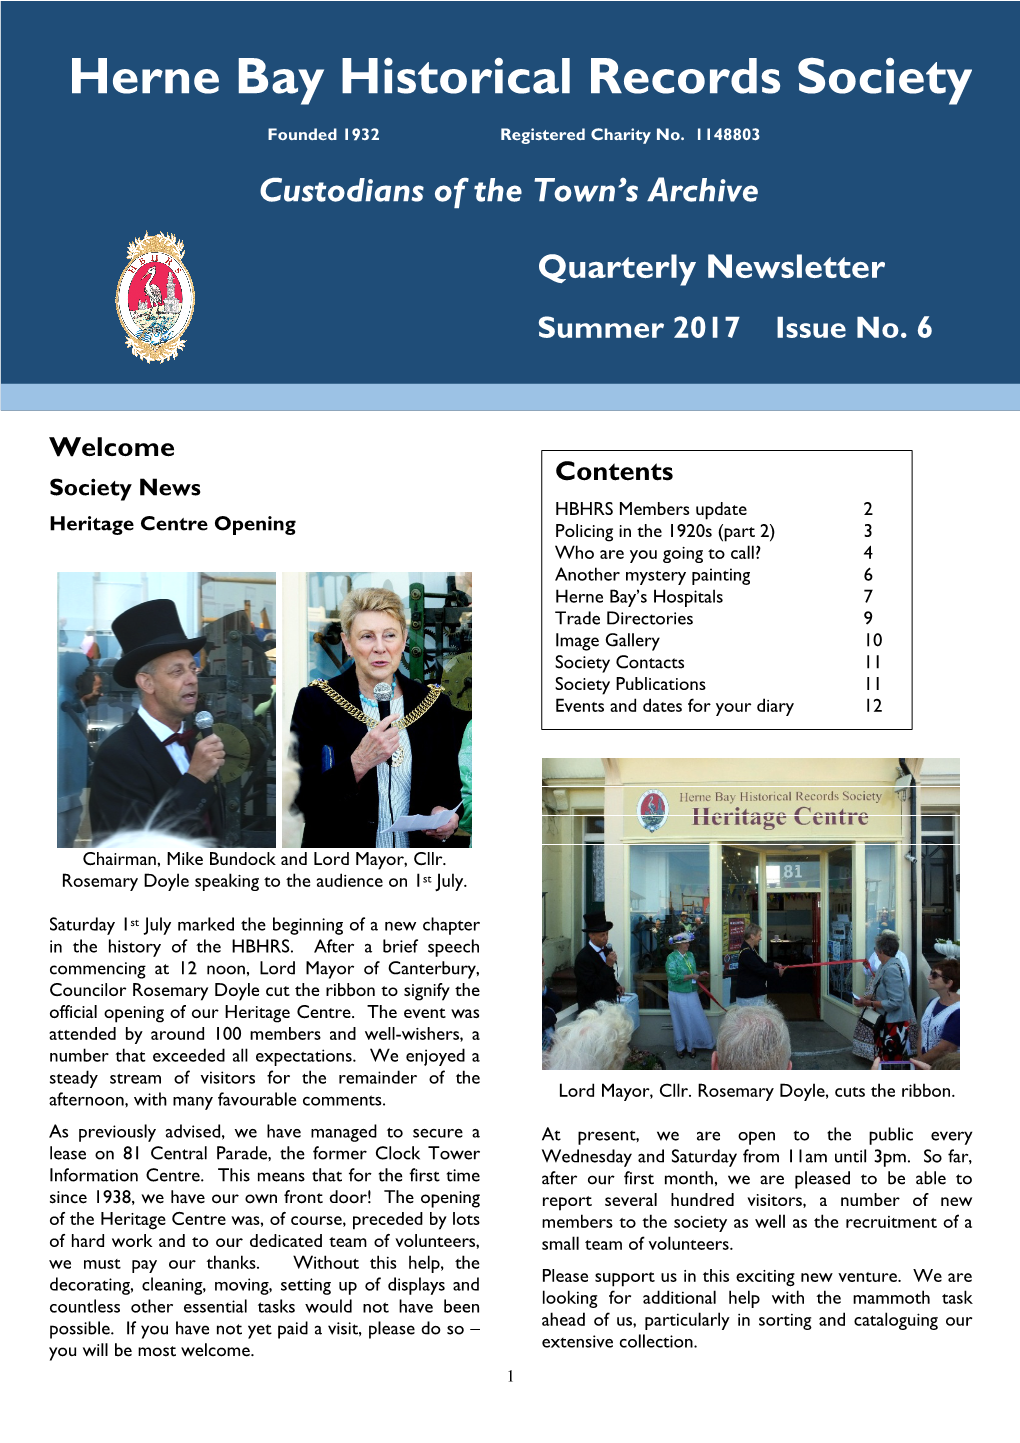 Quarterly Newsletter Summer 2017 Erne Bay Historical Records Society